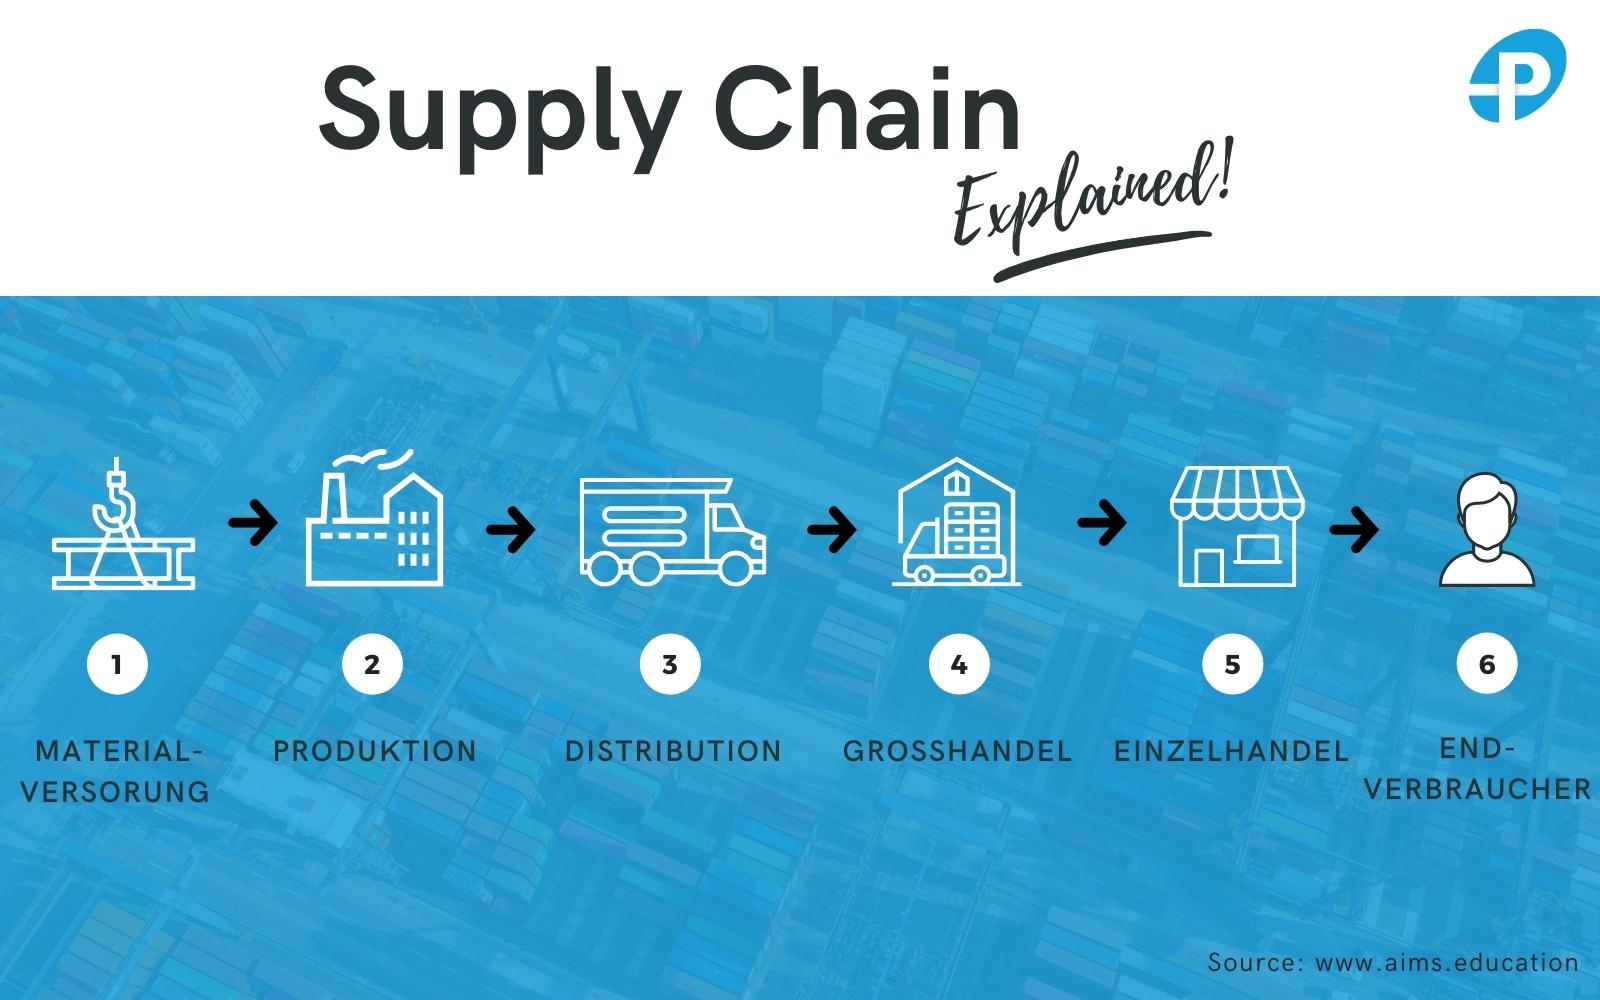 Supply Chain DE Logistik software